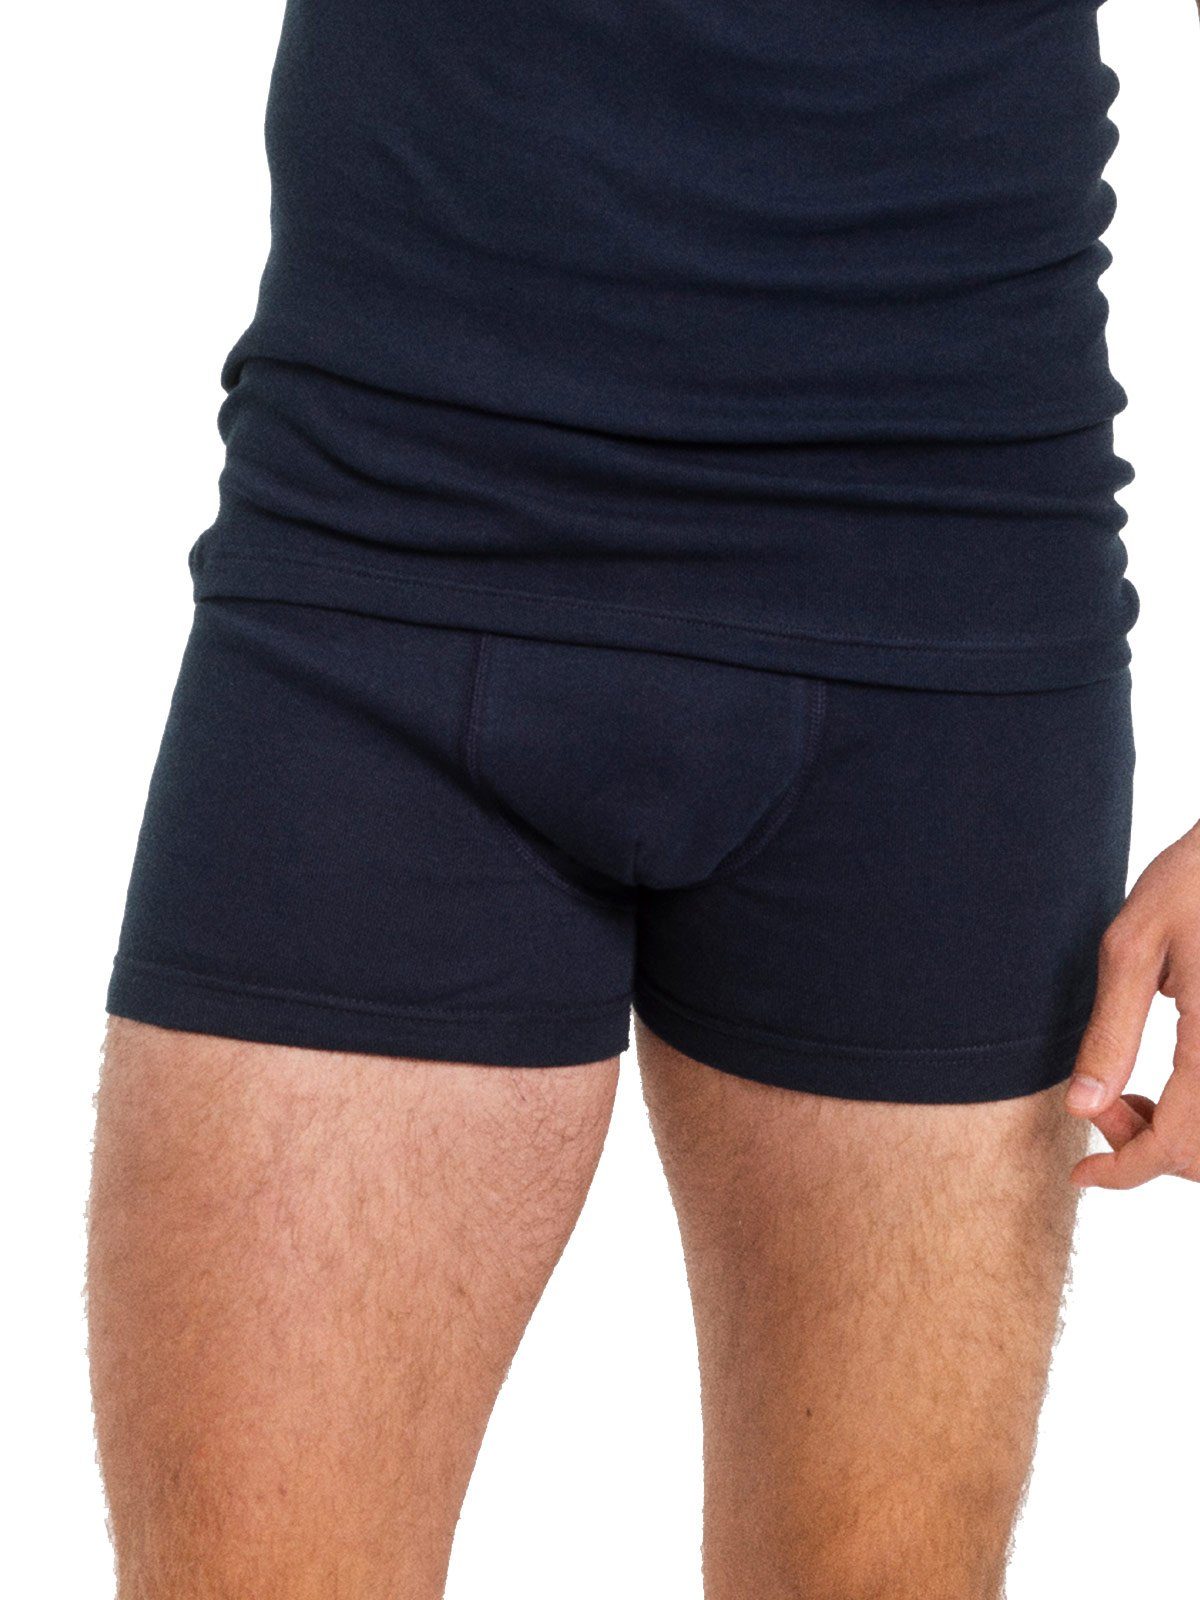 KUMPF Retro Pants Herren Pants 2er Pack Bio Cotton (Packung, 2-St) hohe Markenqualität dunkelblau